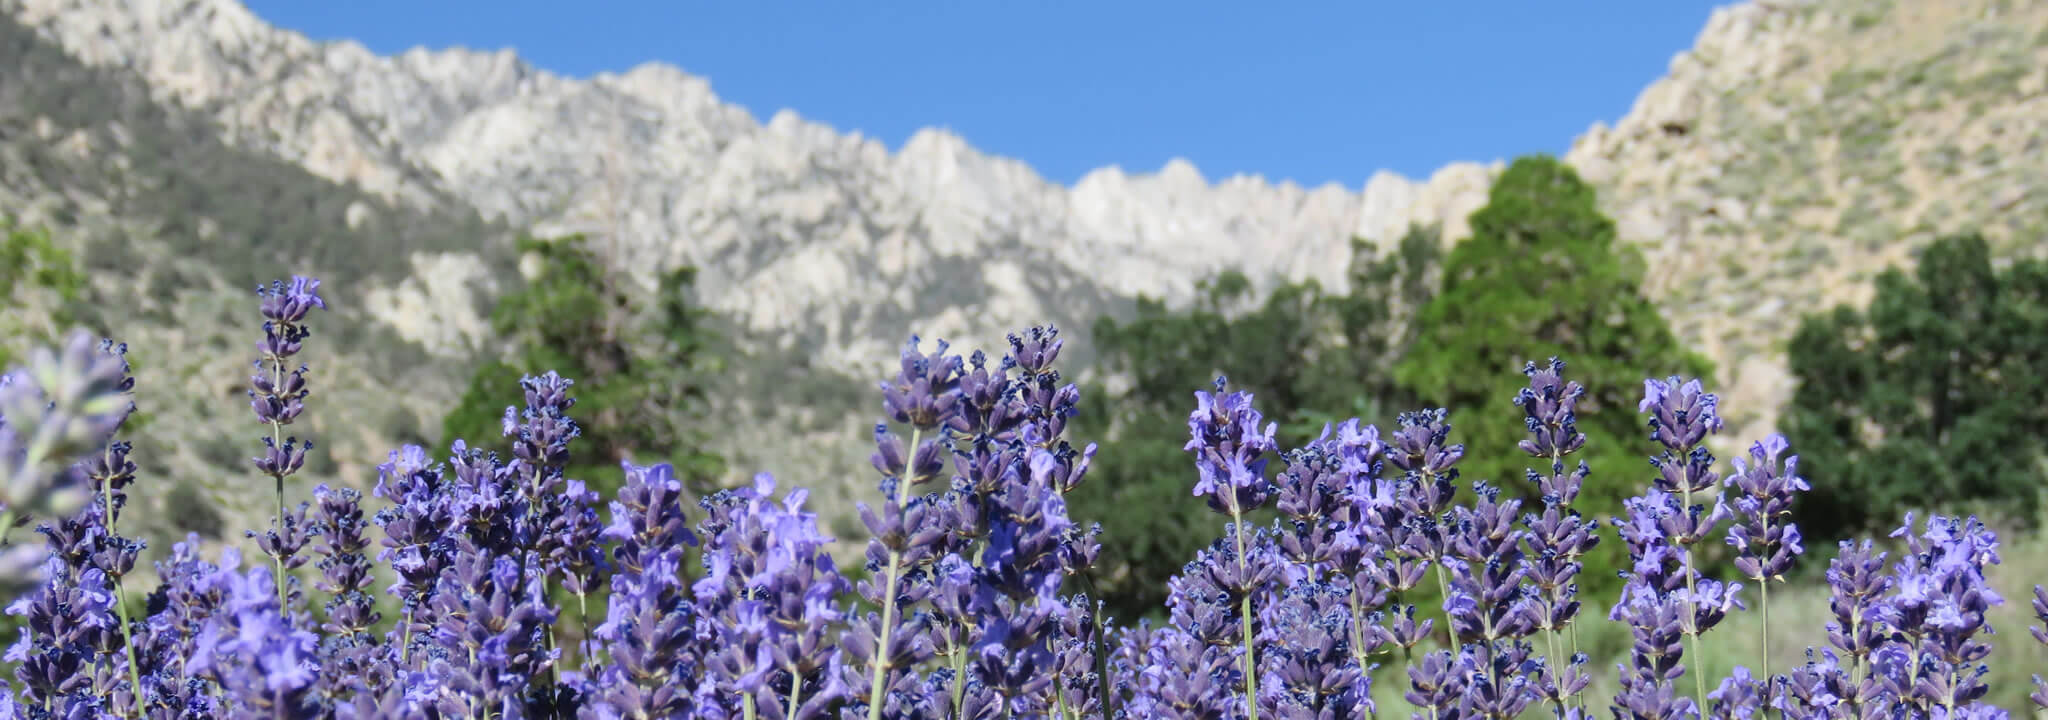 lavender-mountains